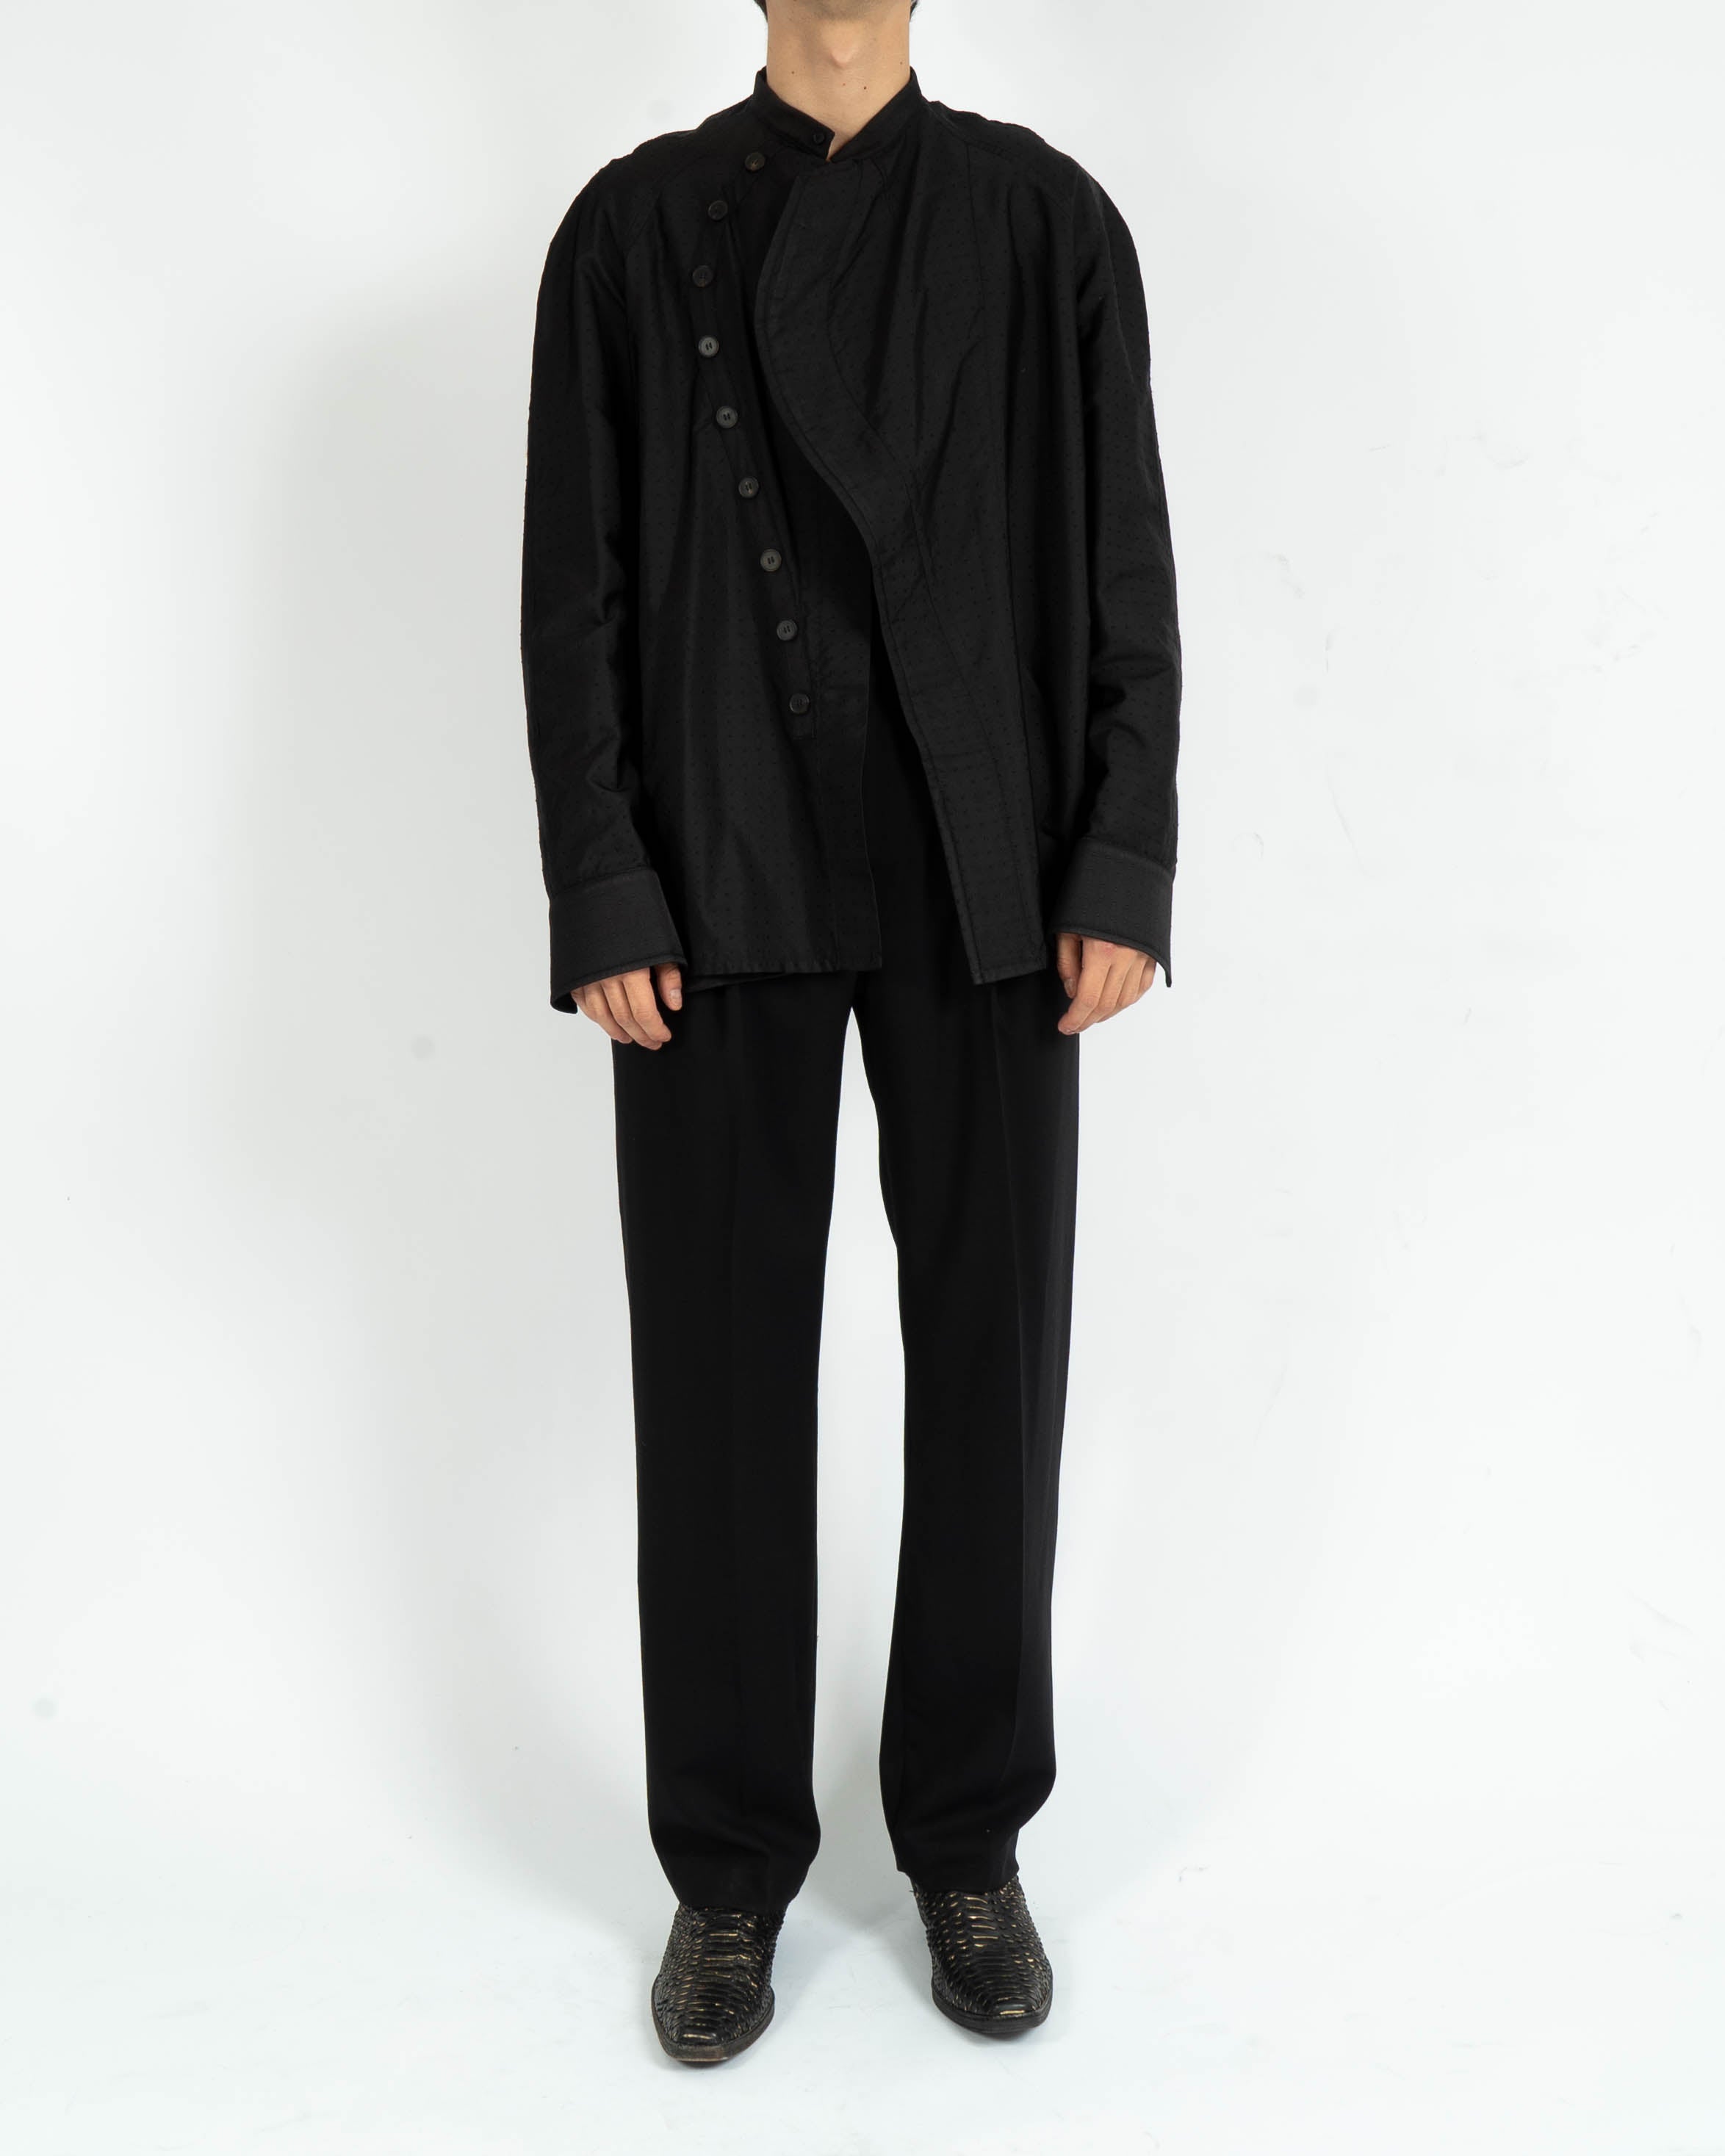 FW17 Dotted Silk Jacquard Shirt Jacket